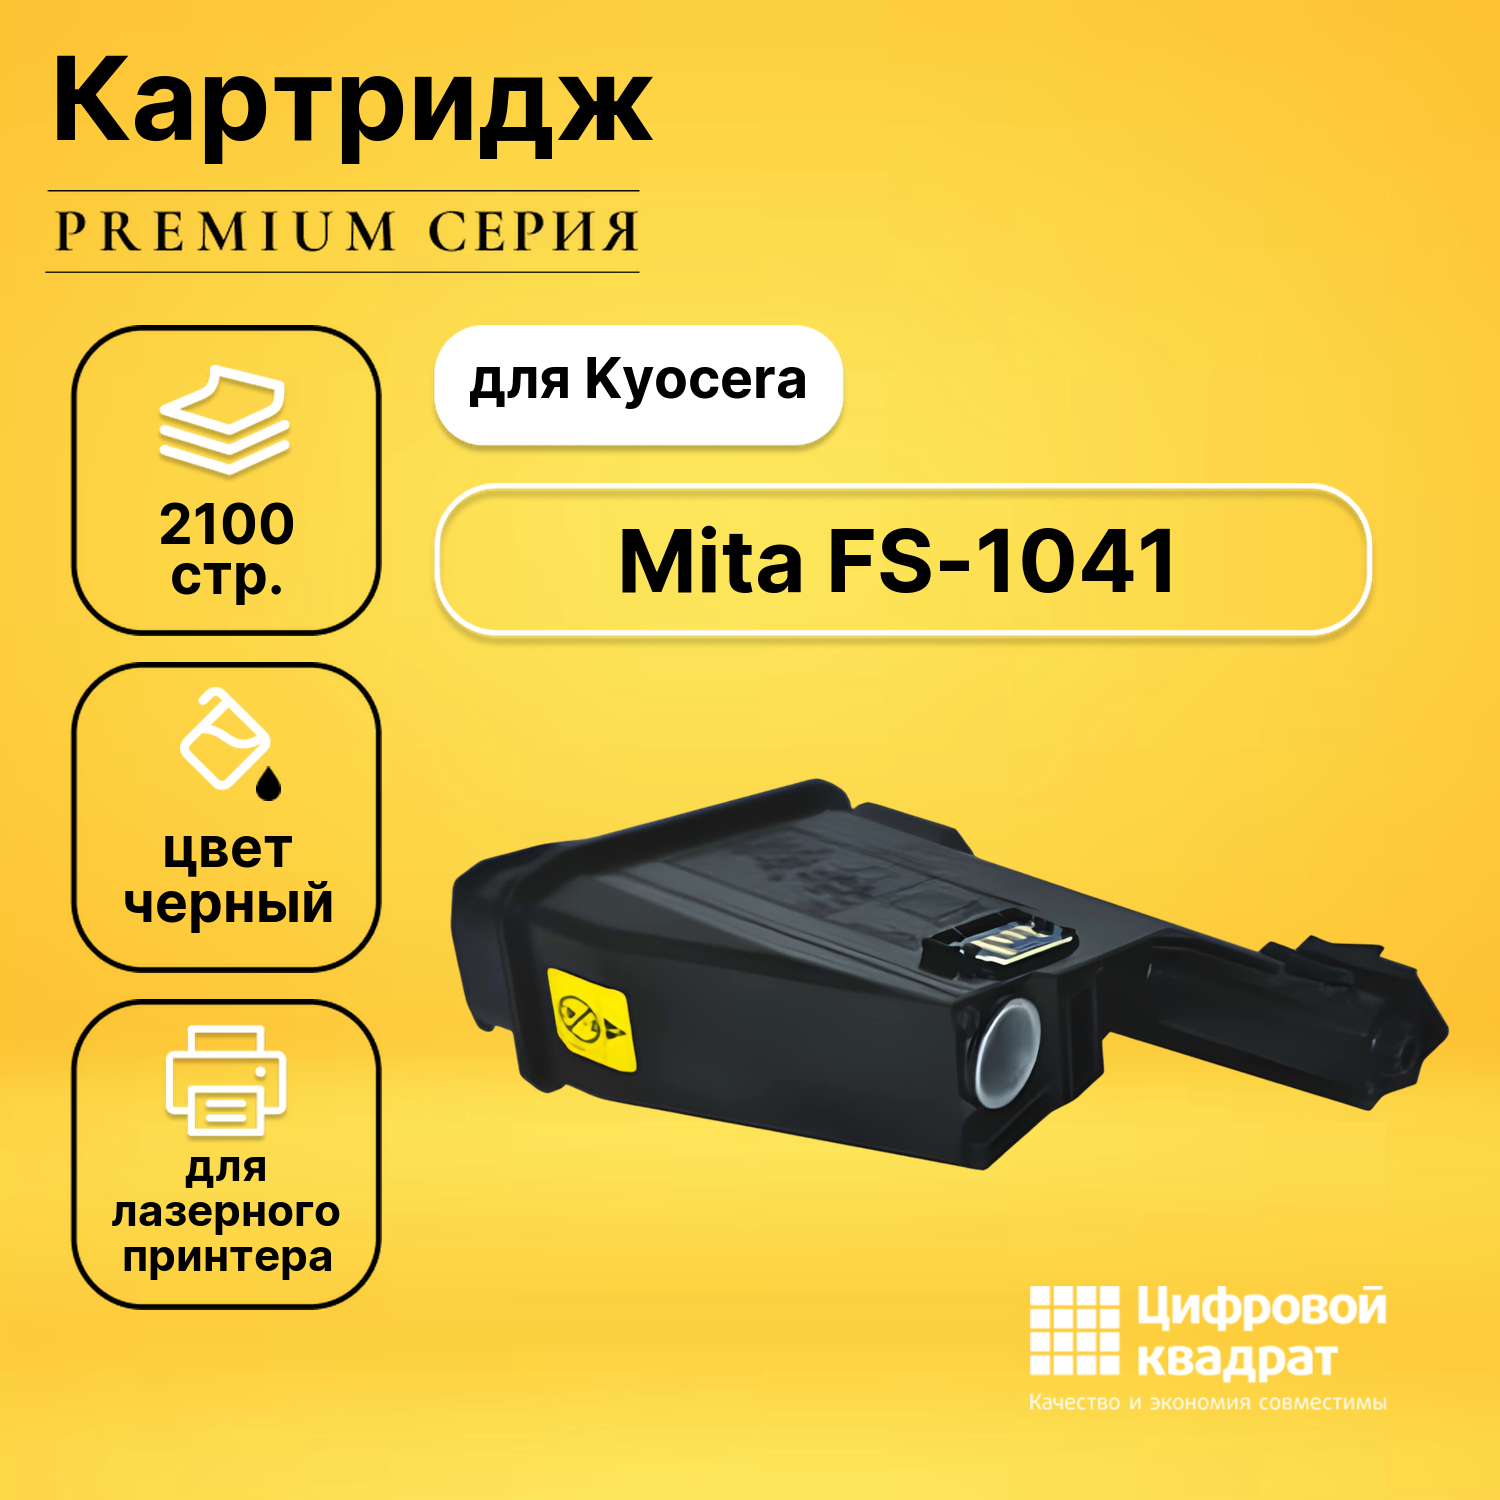 Картридж DS для Kyocera FS-1041 совместимый